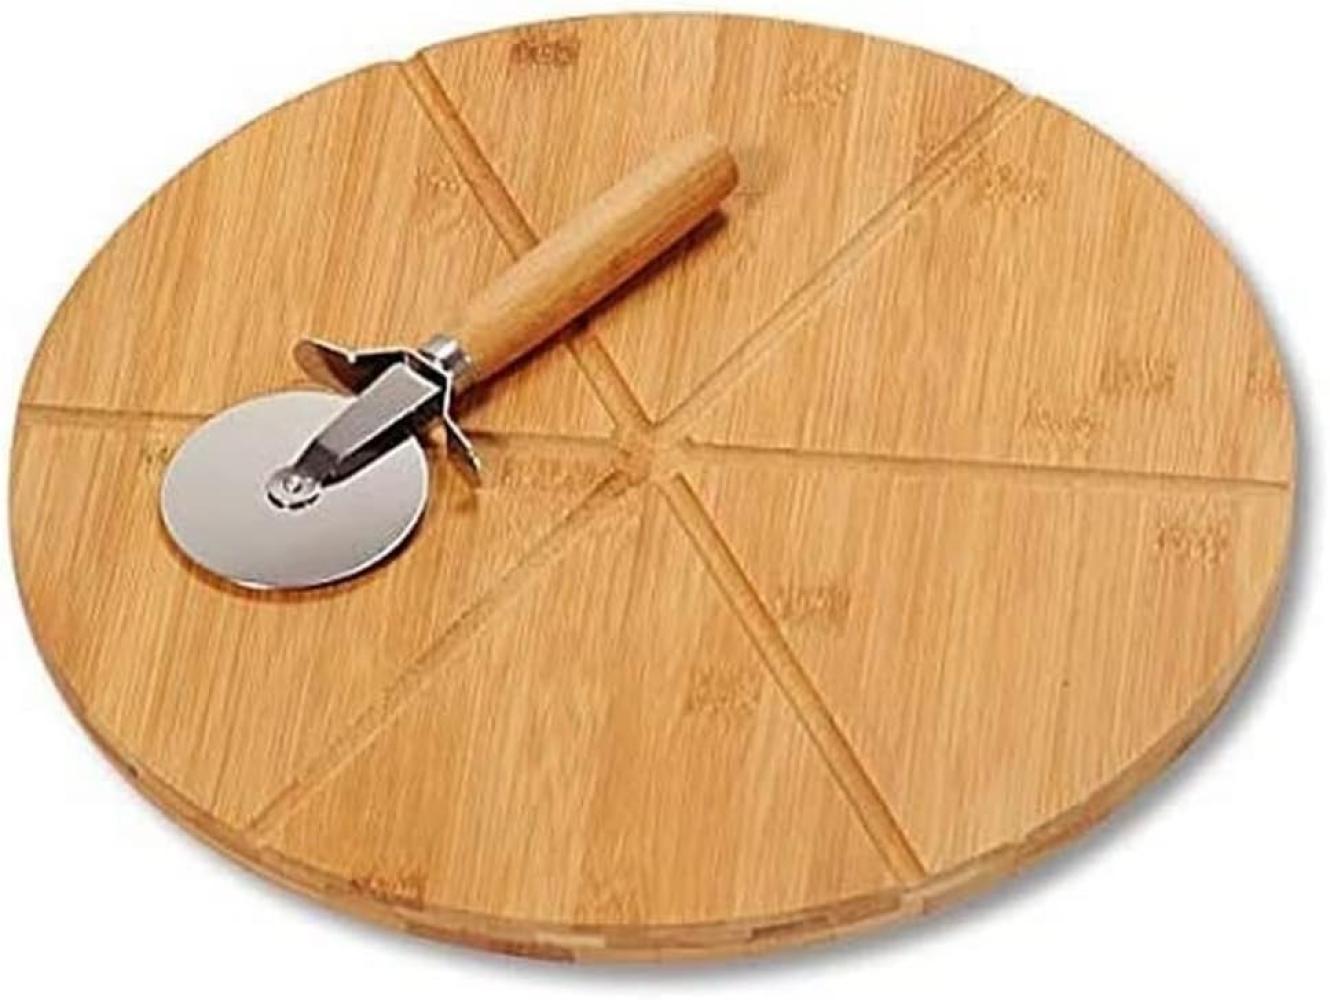 KESPER 58462 Pizzateller 32 cm aus Bambus mit extra Pizzaschneider / Holzteller / Pizzaunterlage / Pizza-Holzteller / Holzgeschirr Bild 1